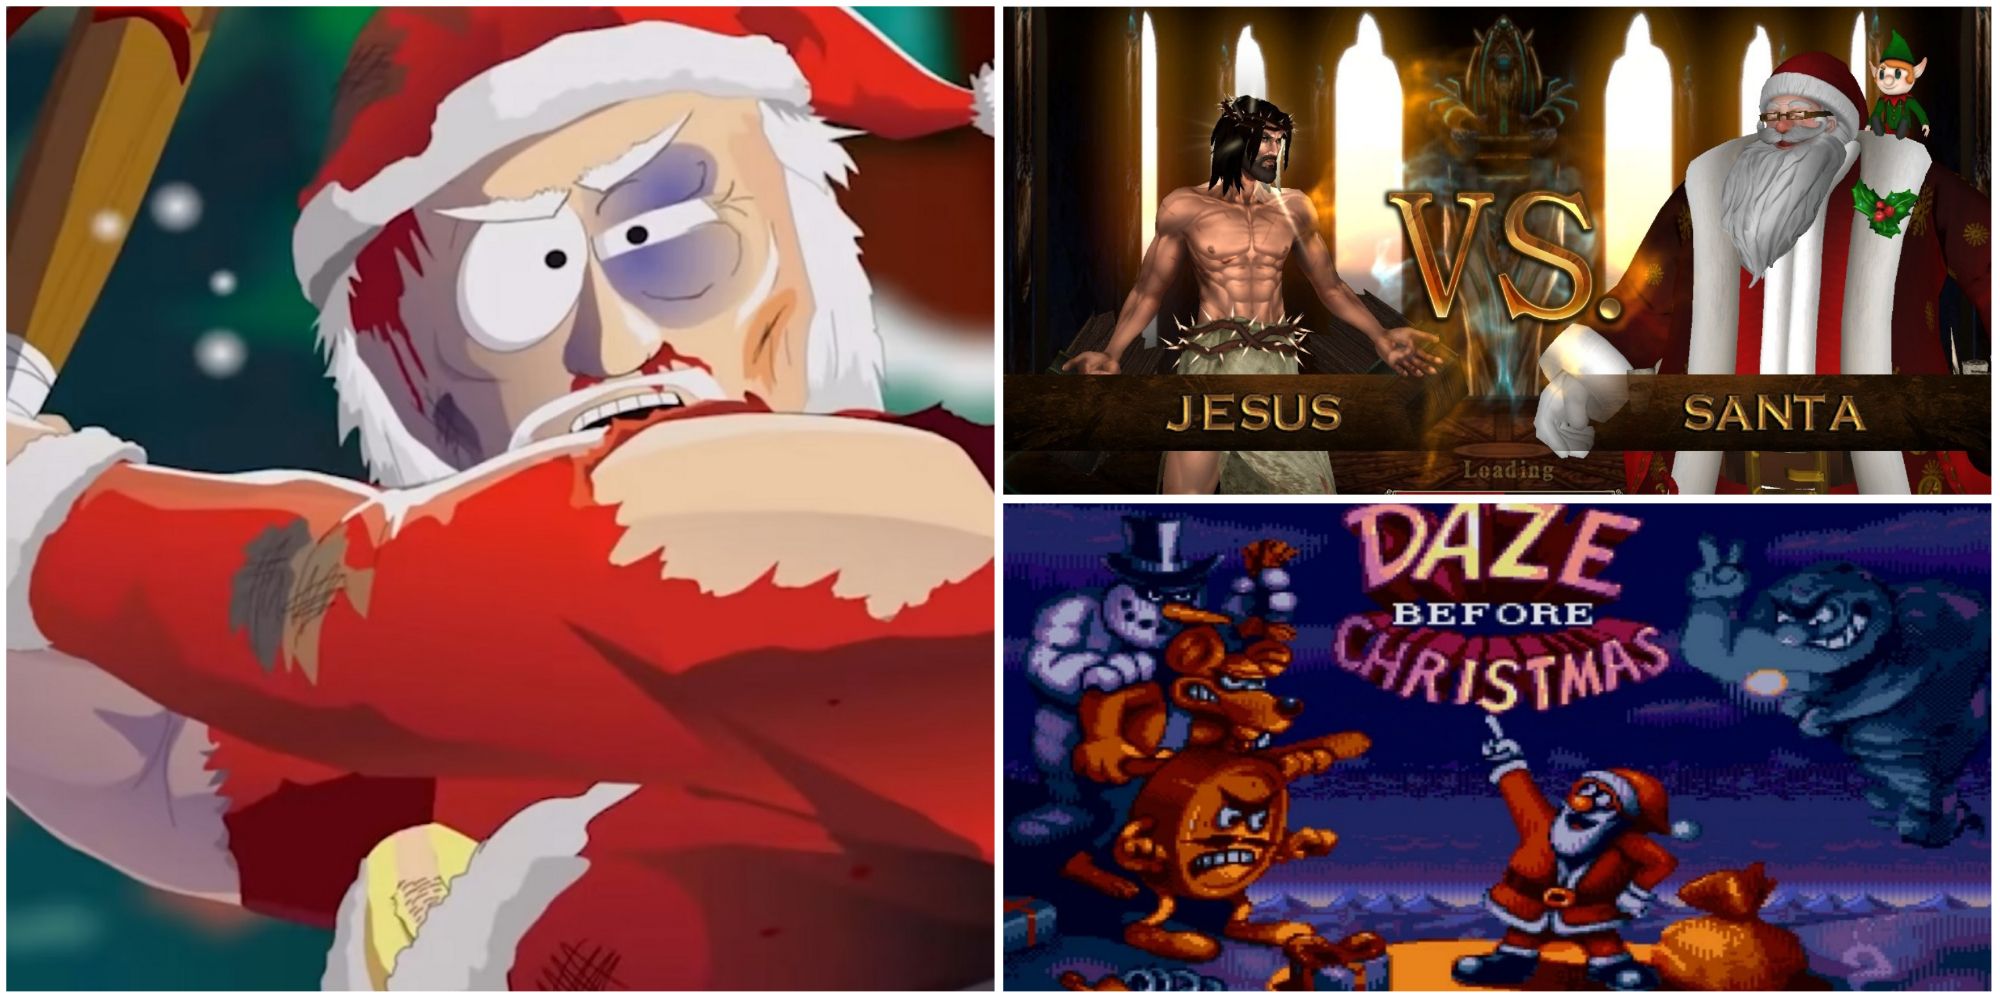 Santa Video Games- South Park Fight of Gods Daze Before Christmas